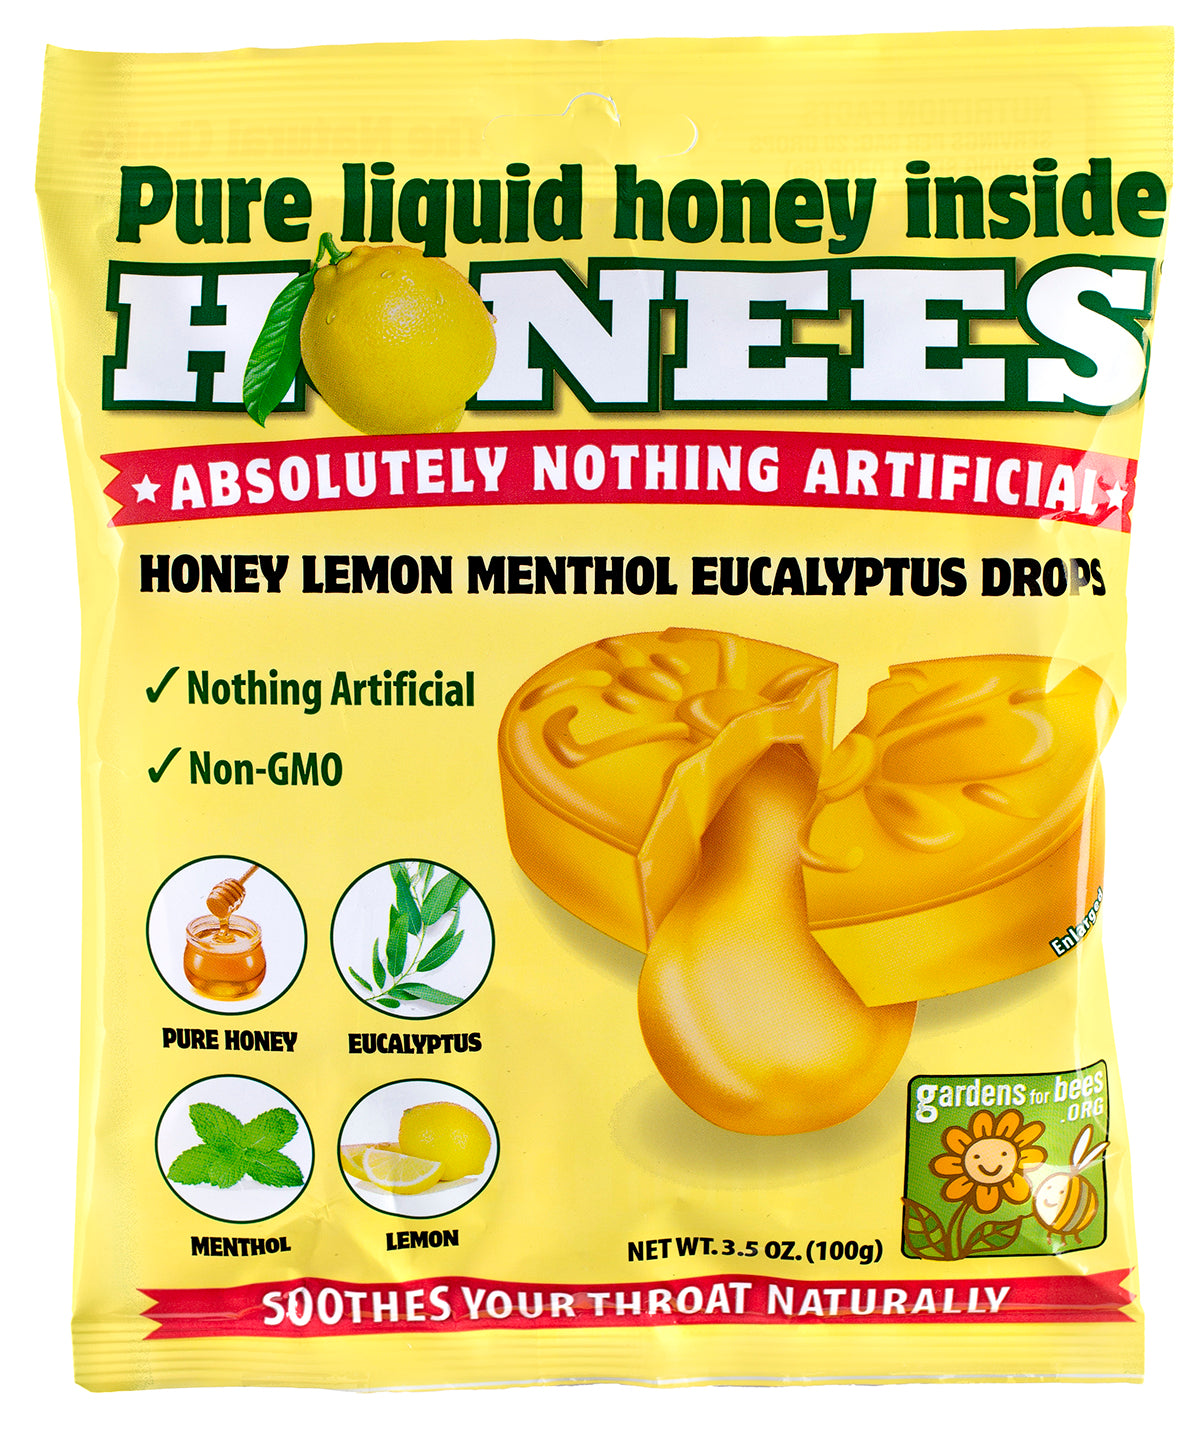 HONEES Honey Filled Drops with Lemon, Menthol, Eucalyptus, 20-count bag